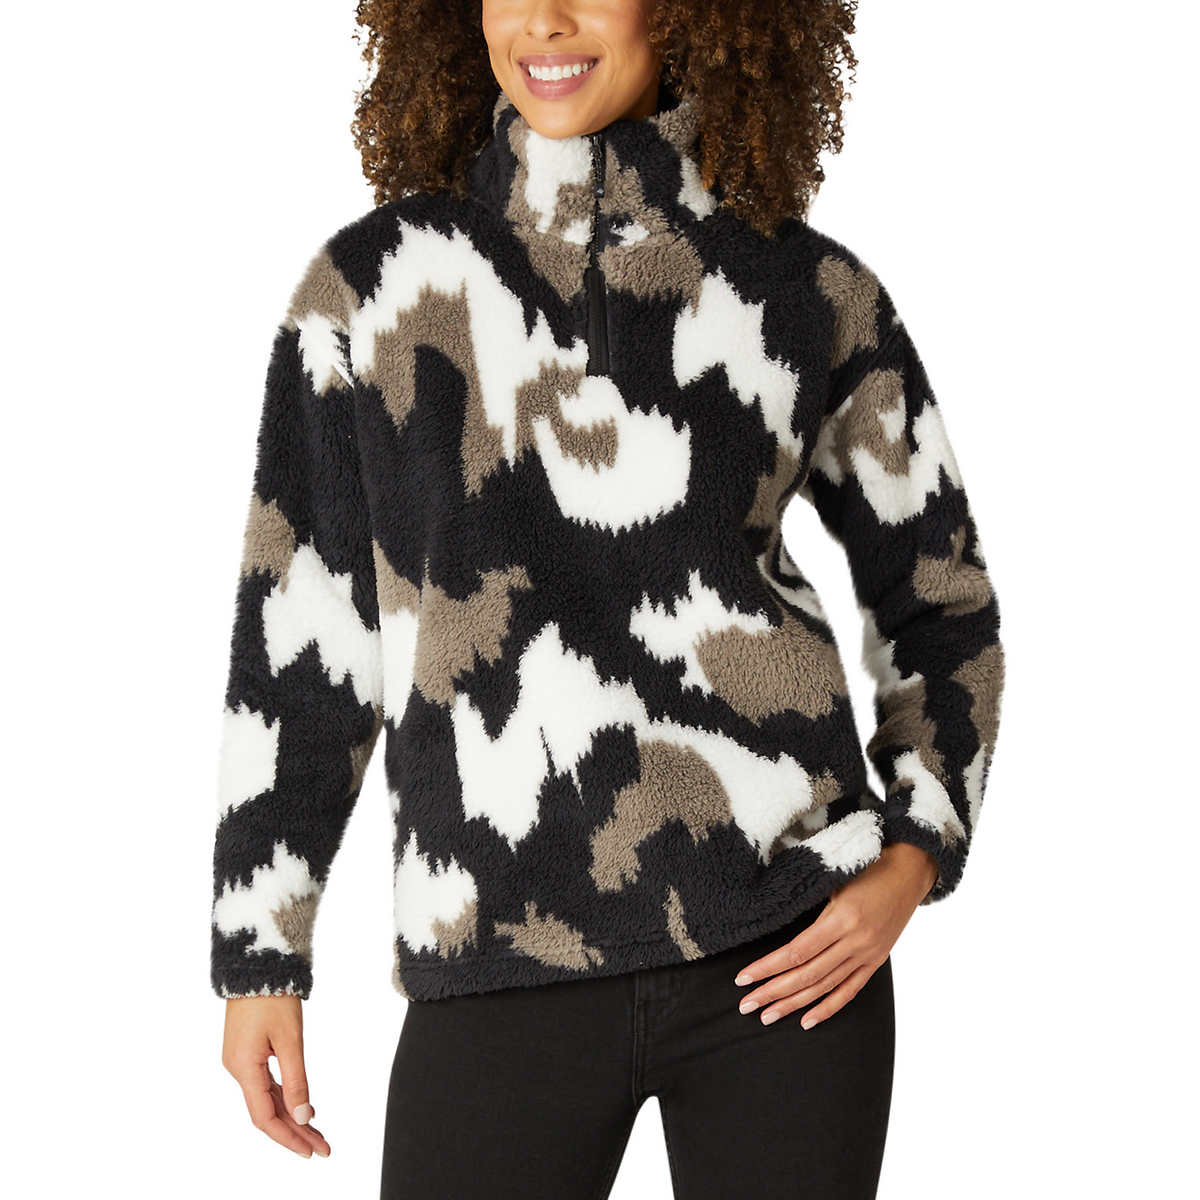 Eddie Bauer Women's Ultra Soft Plush Fleece Quarter Zip Sweatshirt Camo Print Pullover Top